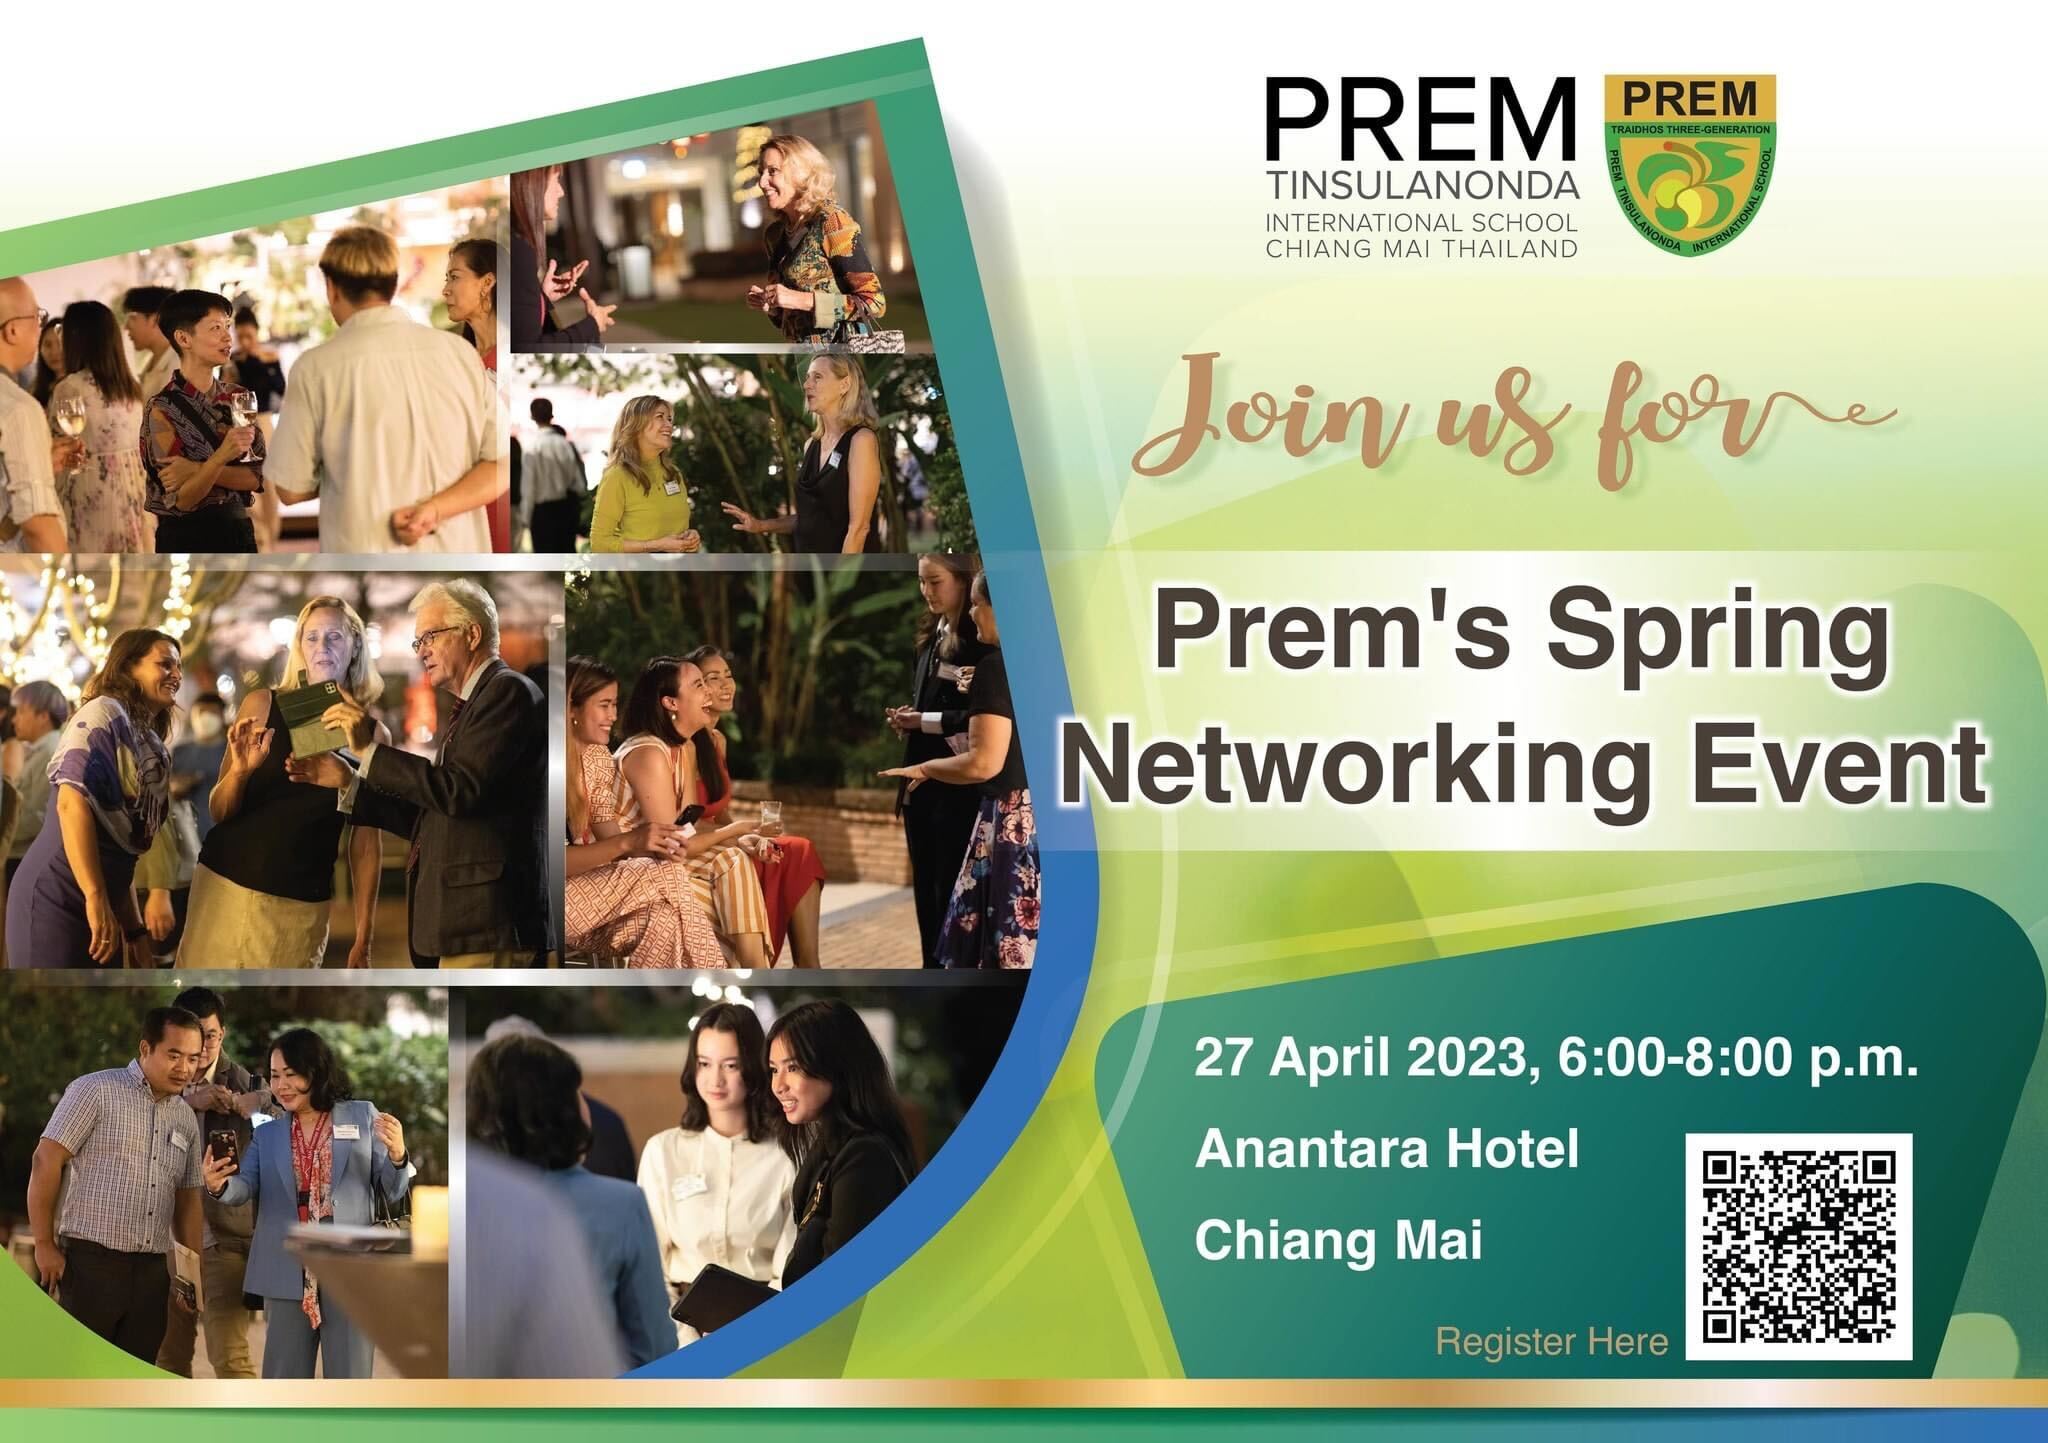 Prem Tinsulanonda International School - Prem's Spring Networking Event